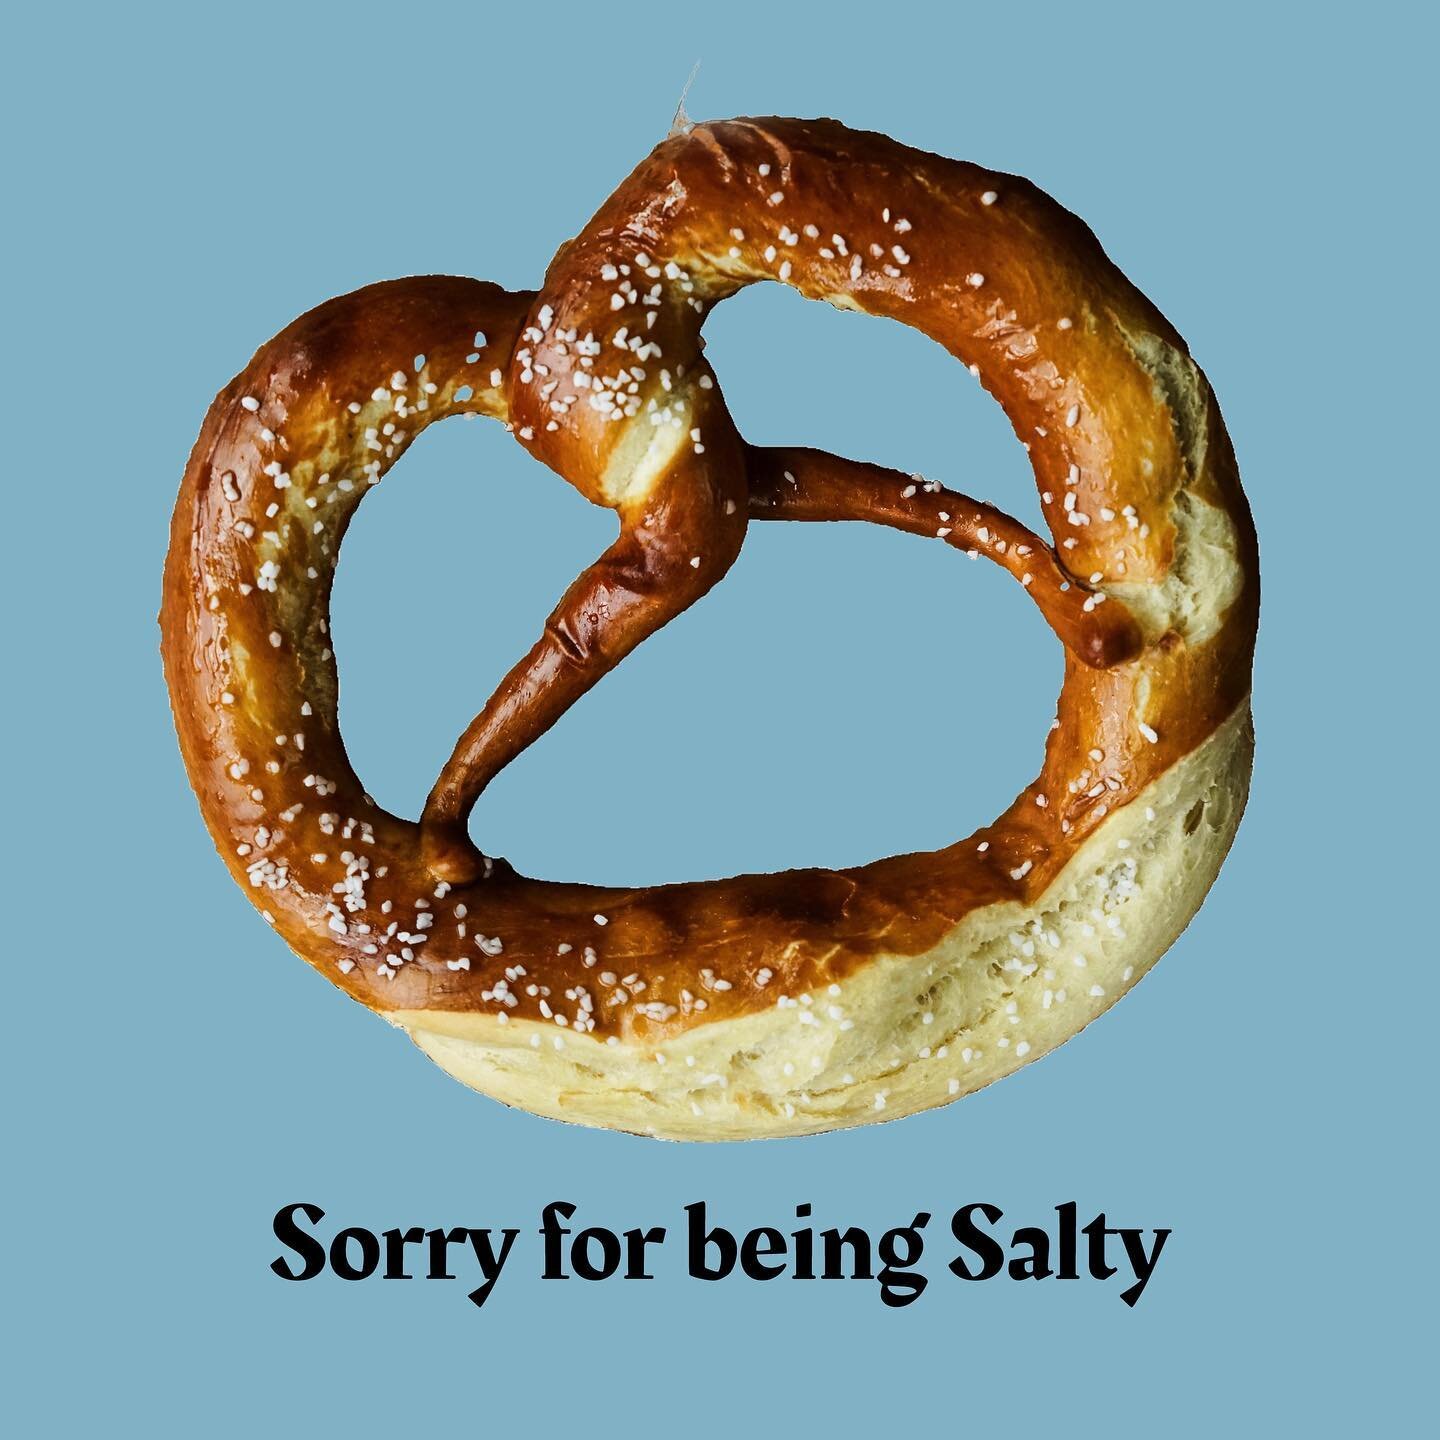 Salty &amp; Delicious. #pretzels #butter #salt